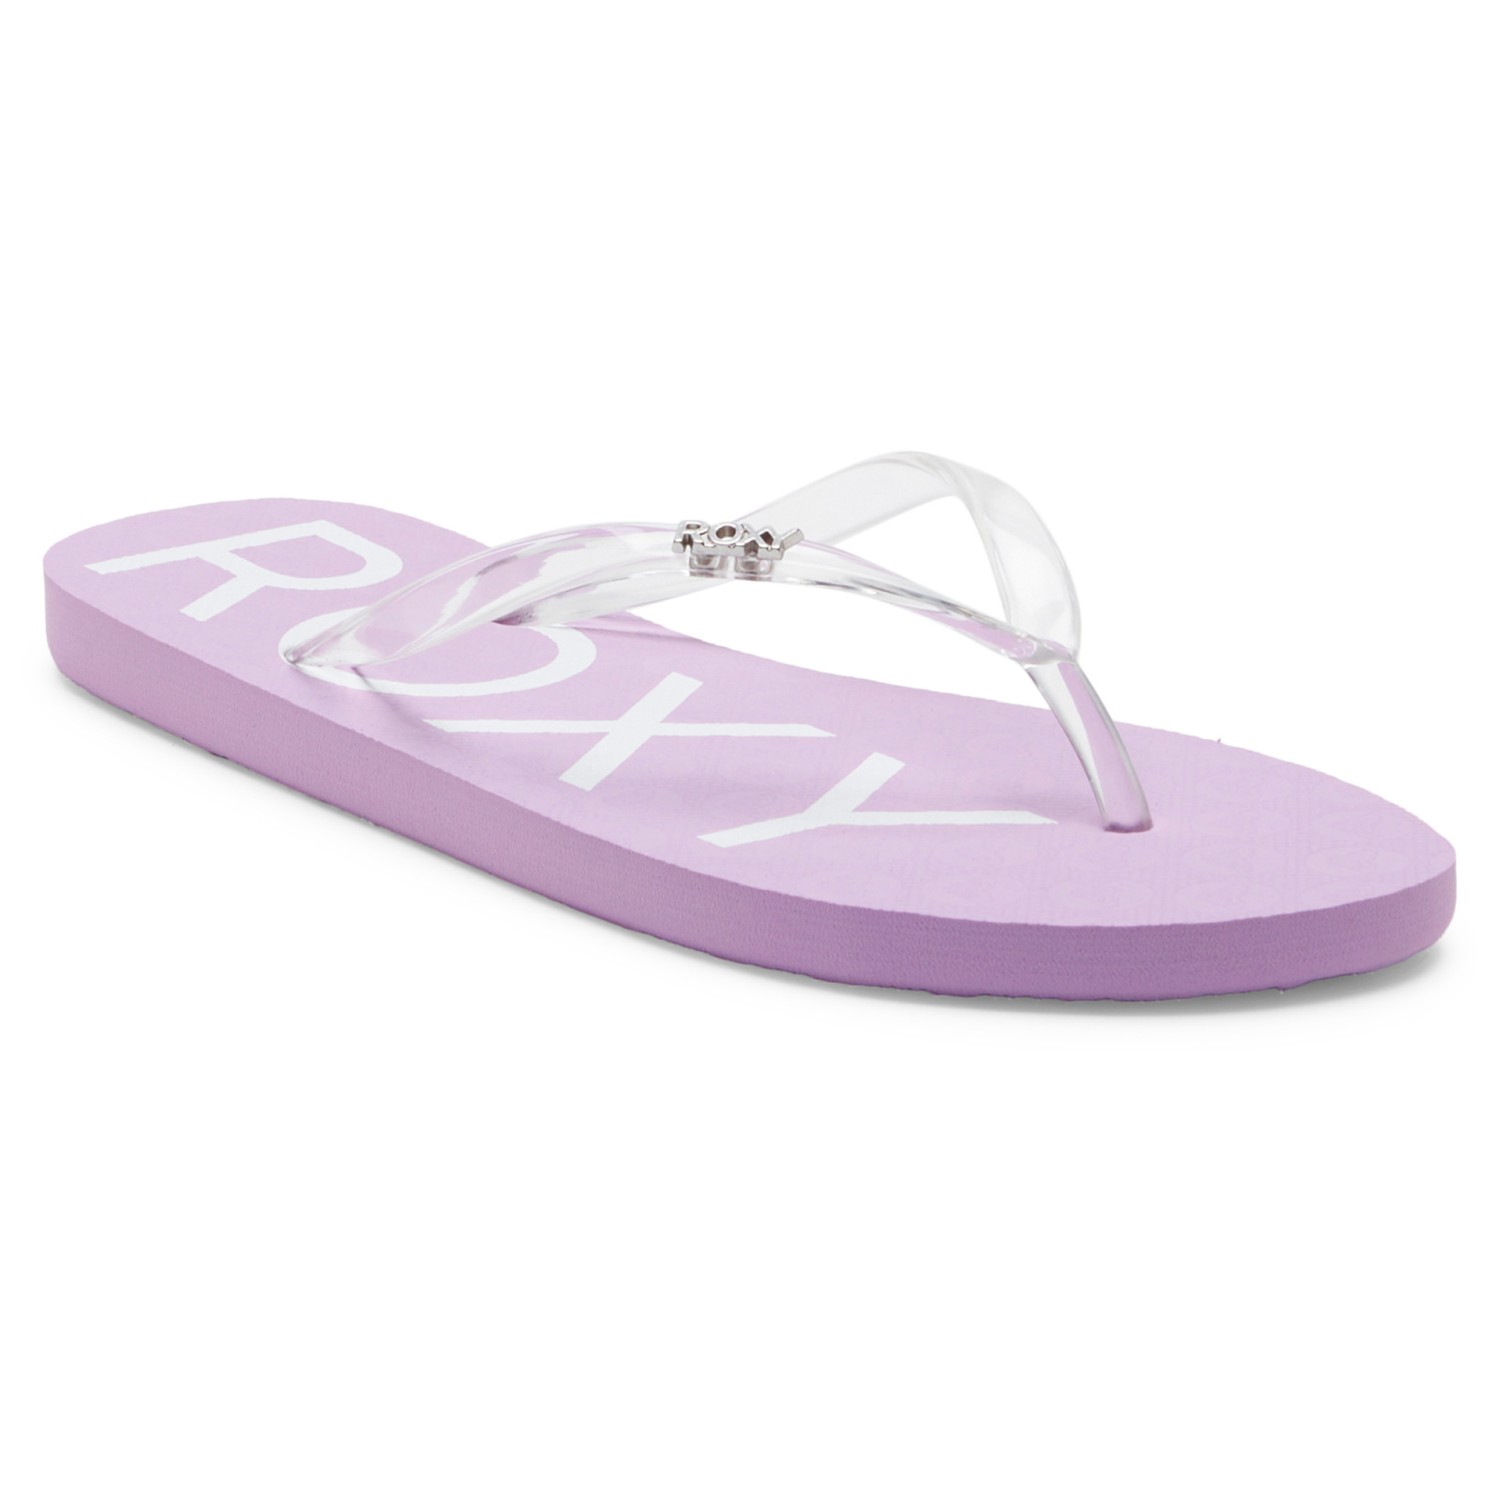 Сандалии Roxy Women's Viva Jelly Sandals, фиолетовый